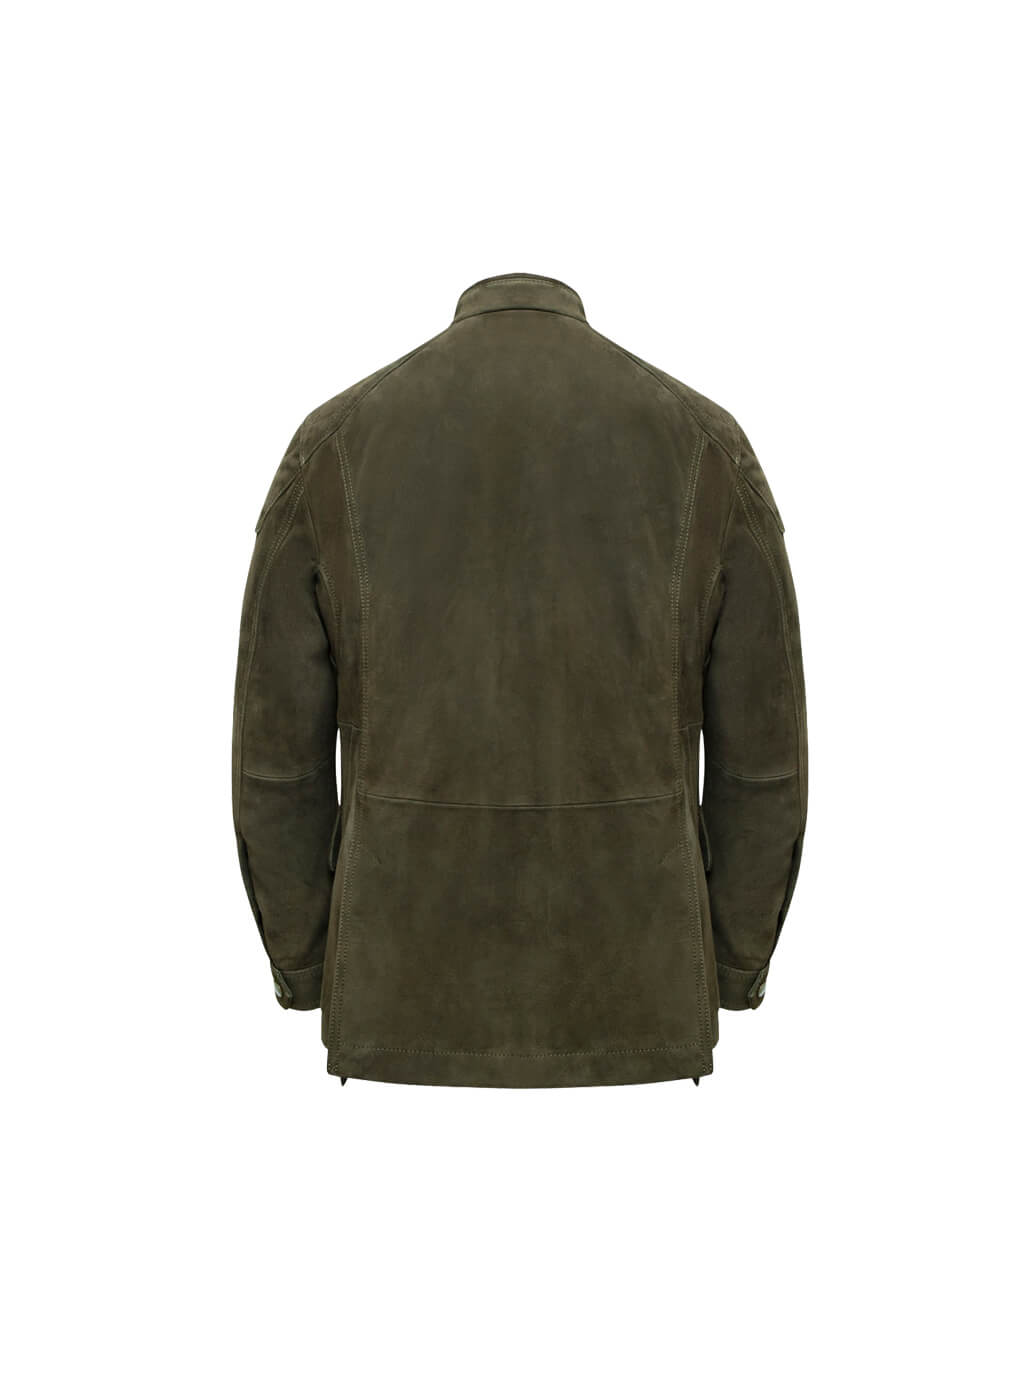 Goat Leather Jacket Men “Duke”, urban green